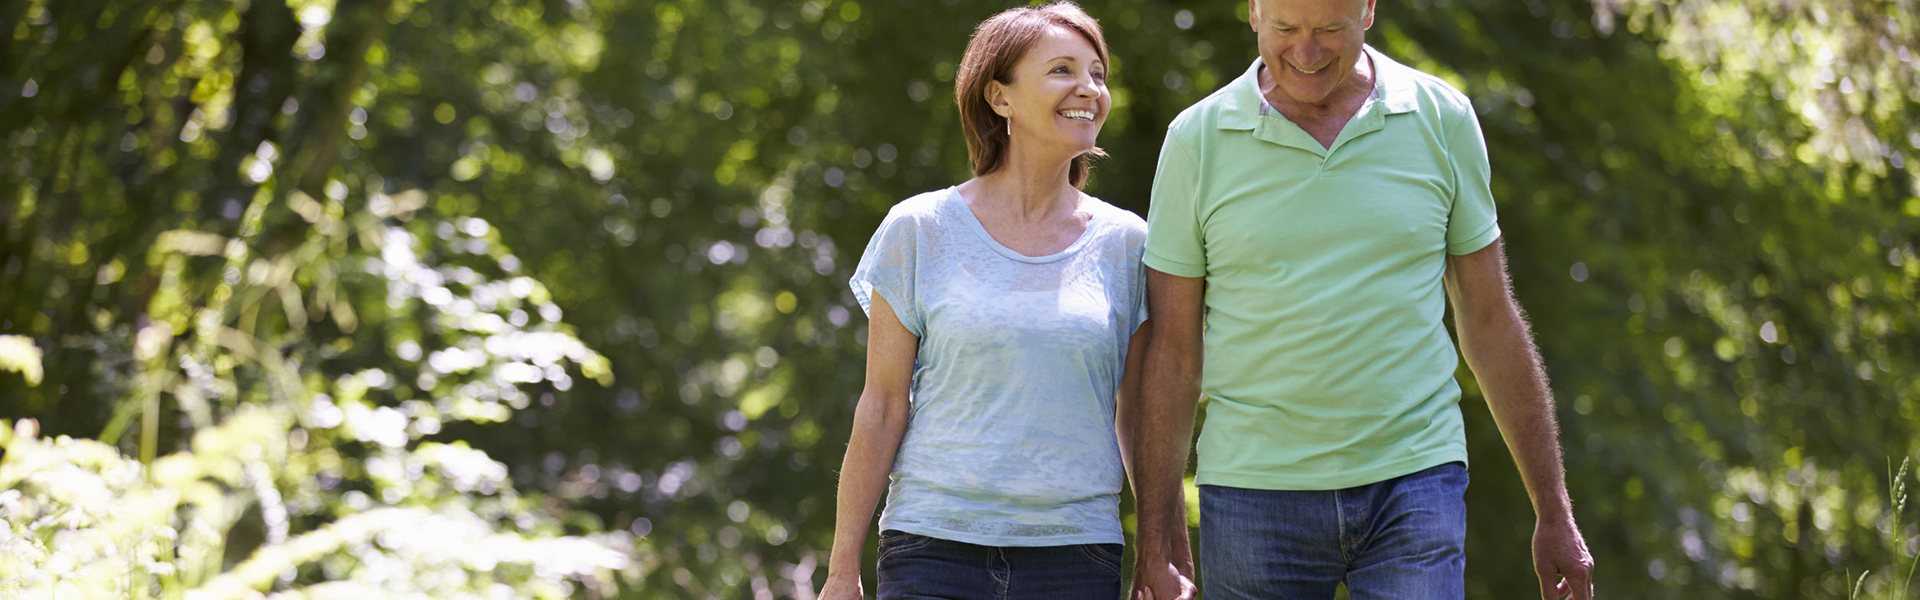 42270941 - senior couple walking in summer countryside